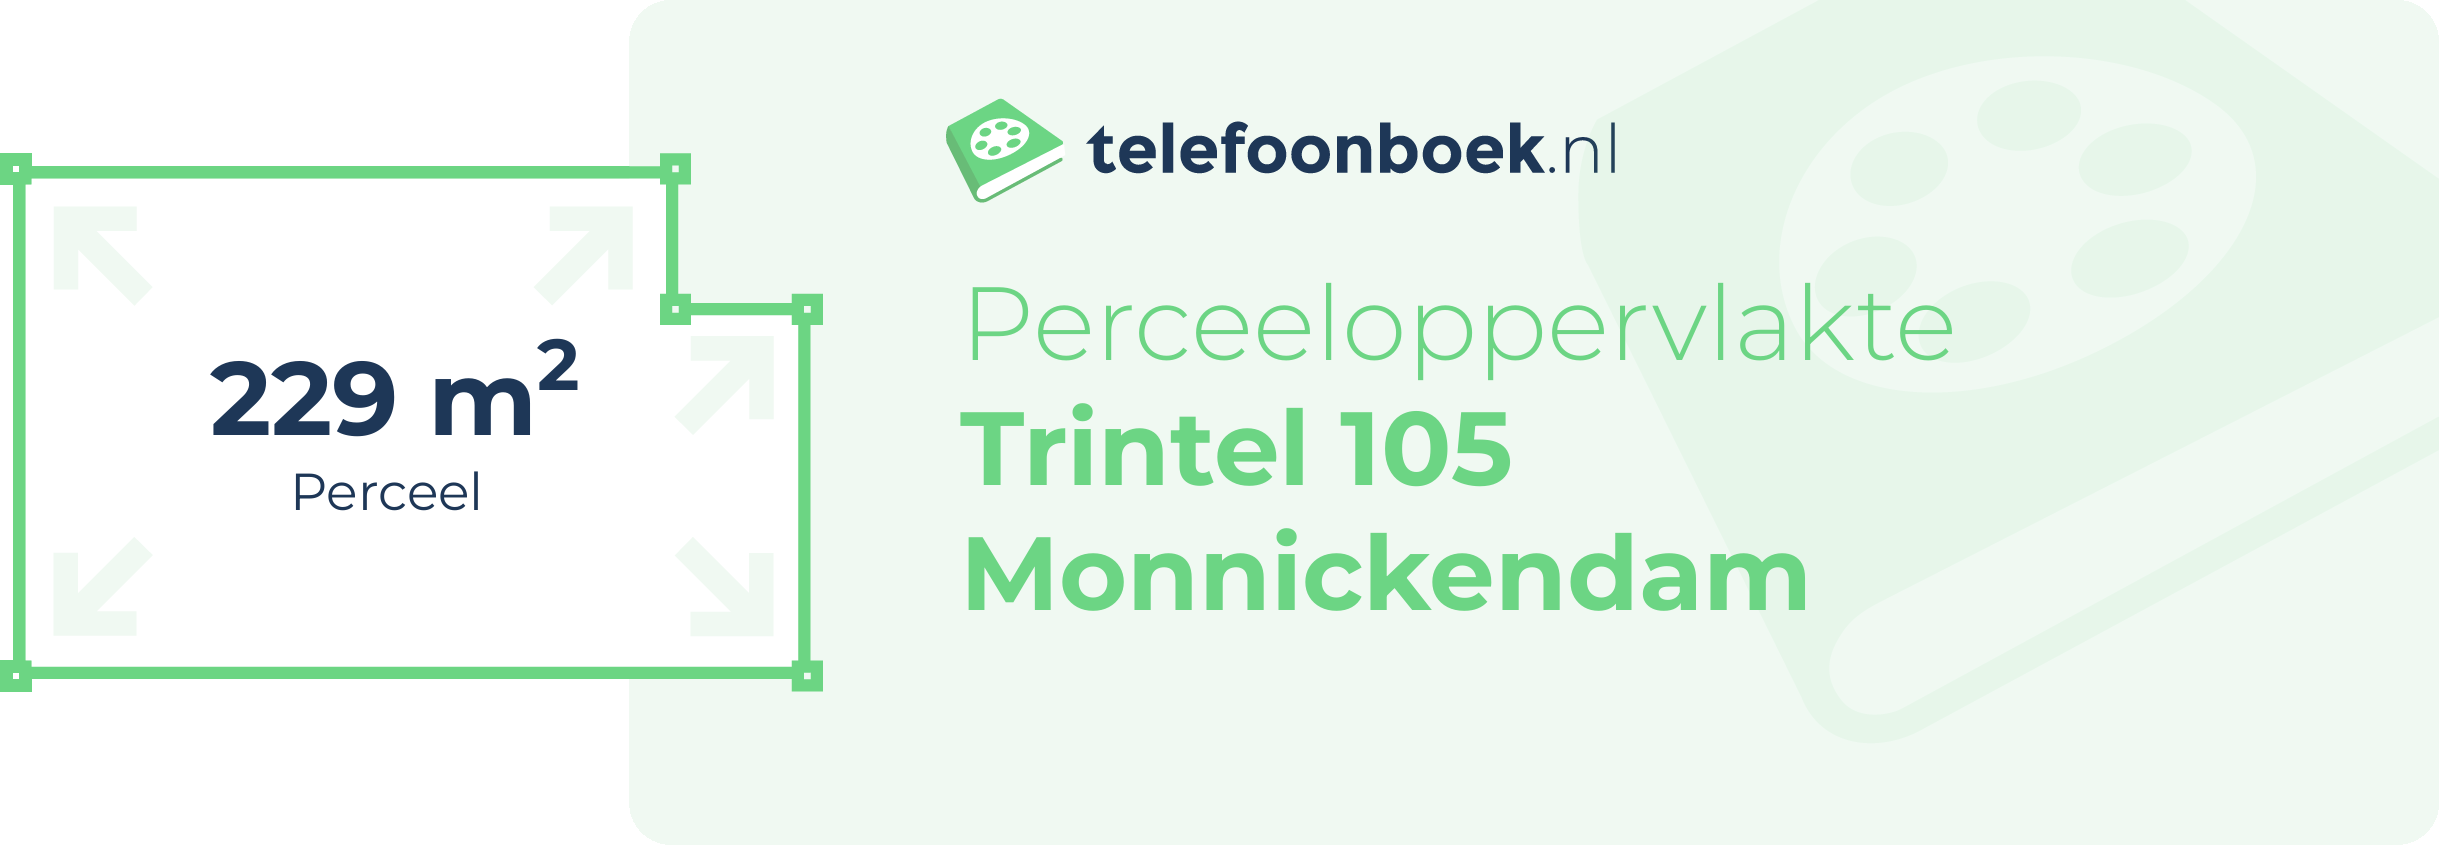 Perceeloppervlakte Trintel 105 Monnickendam